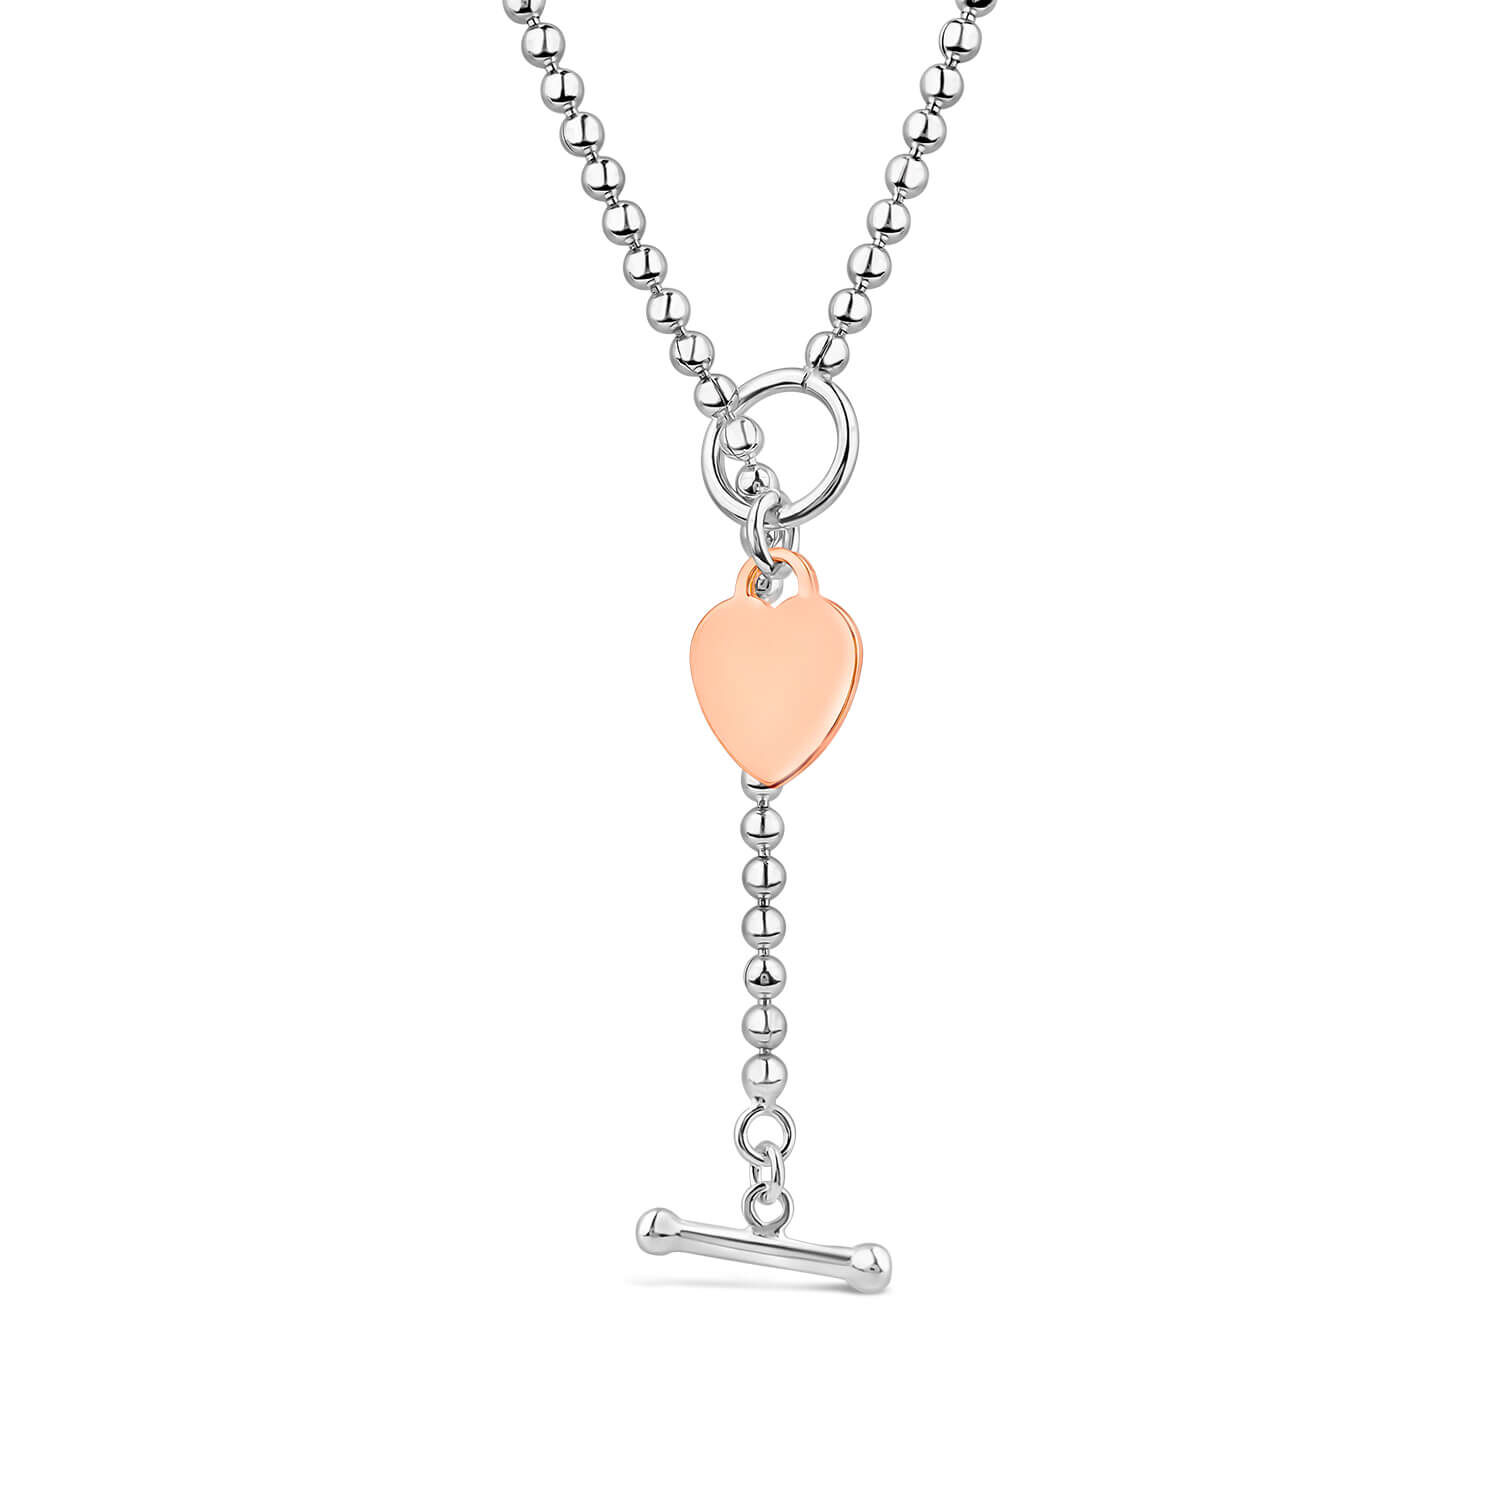 Tiffany's New Perfume - Julia Berolzheimer | Tiffany smile necklace, Luxe  jewelry, Tiffany t